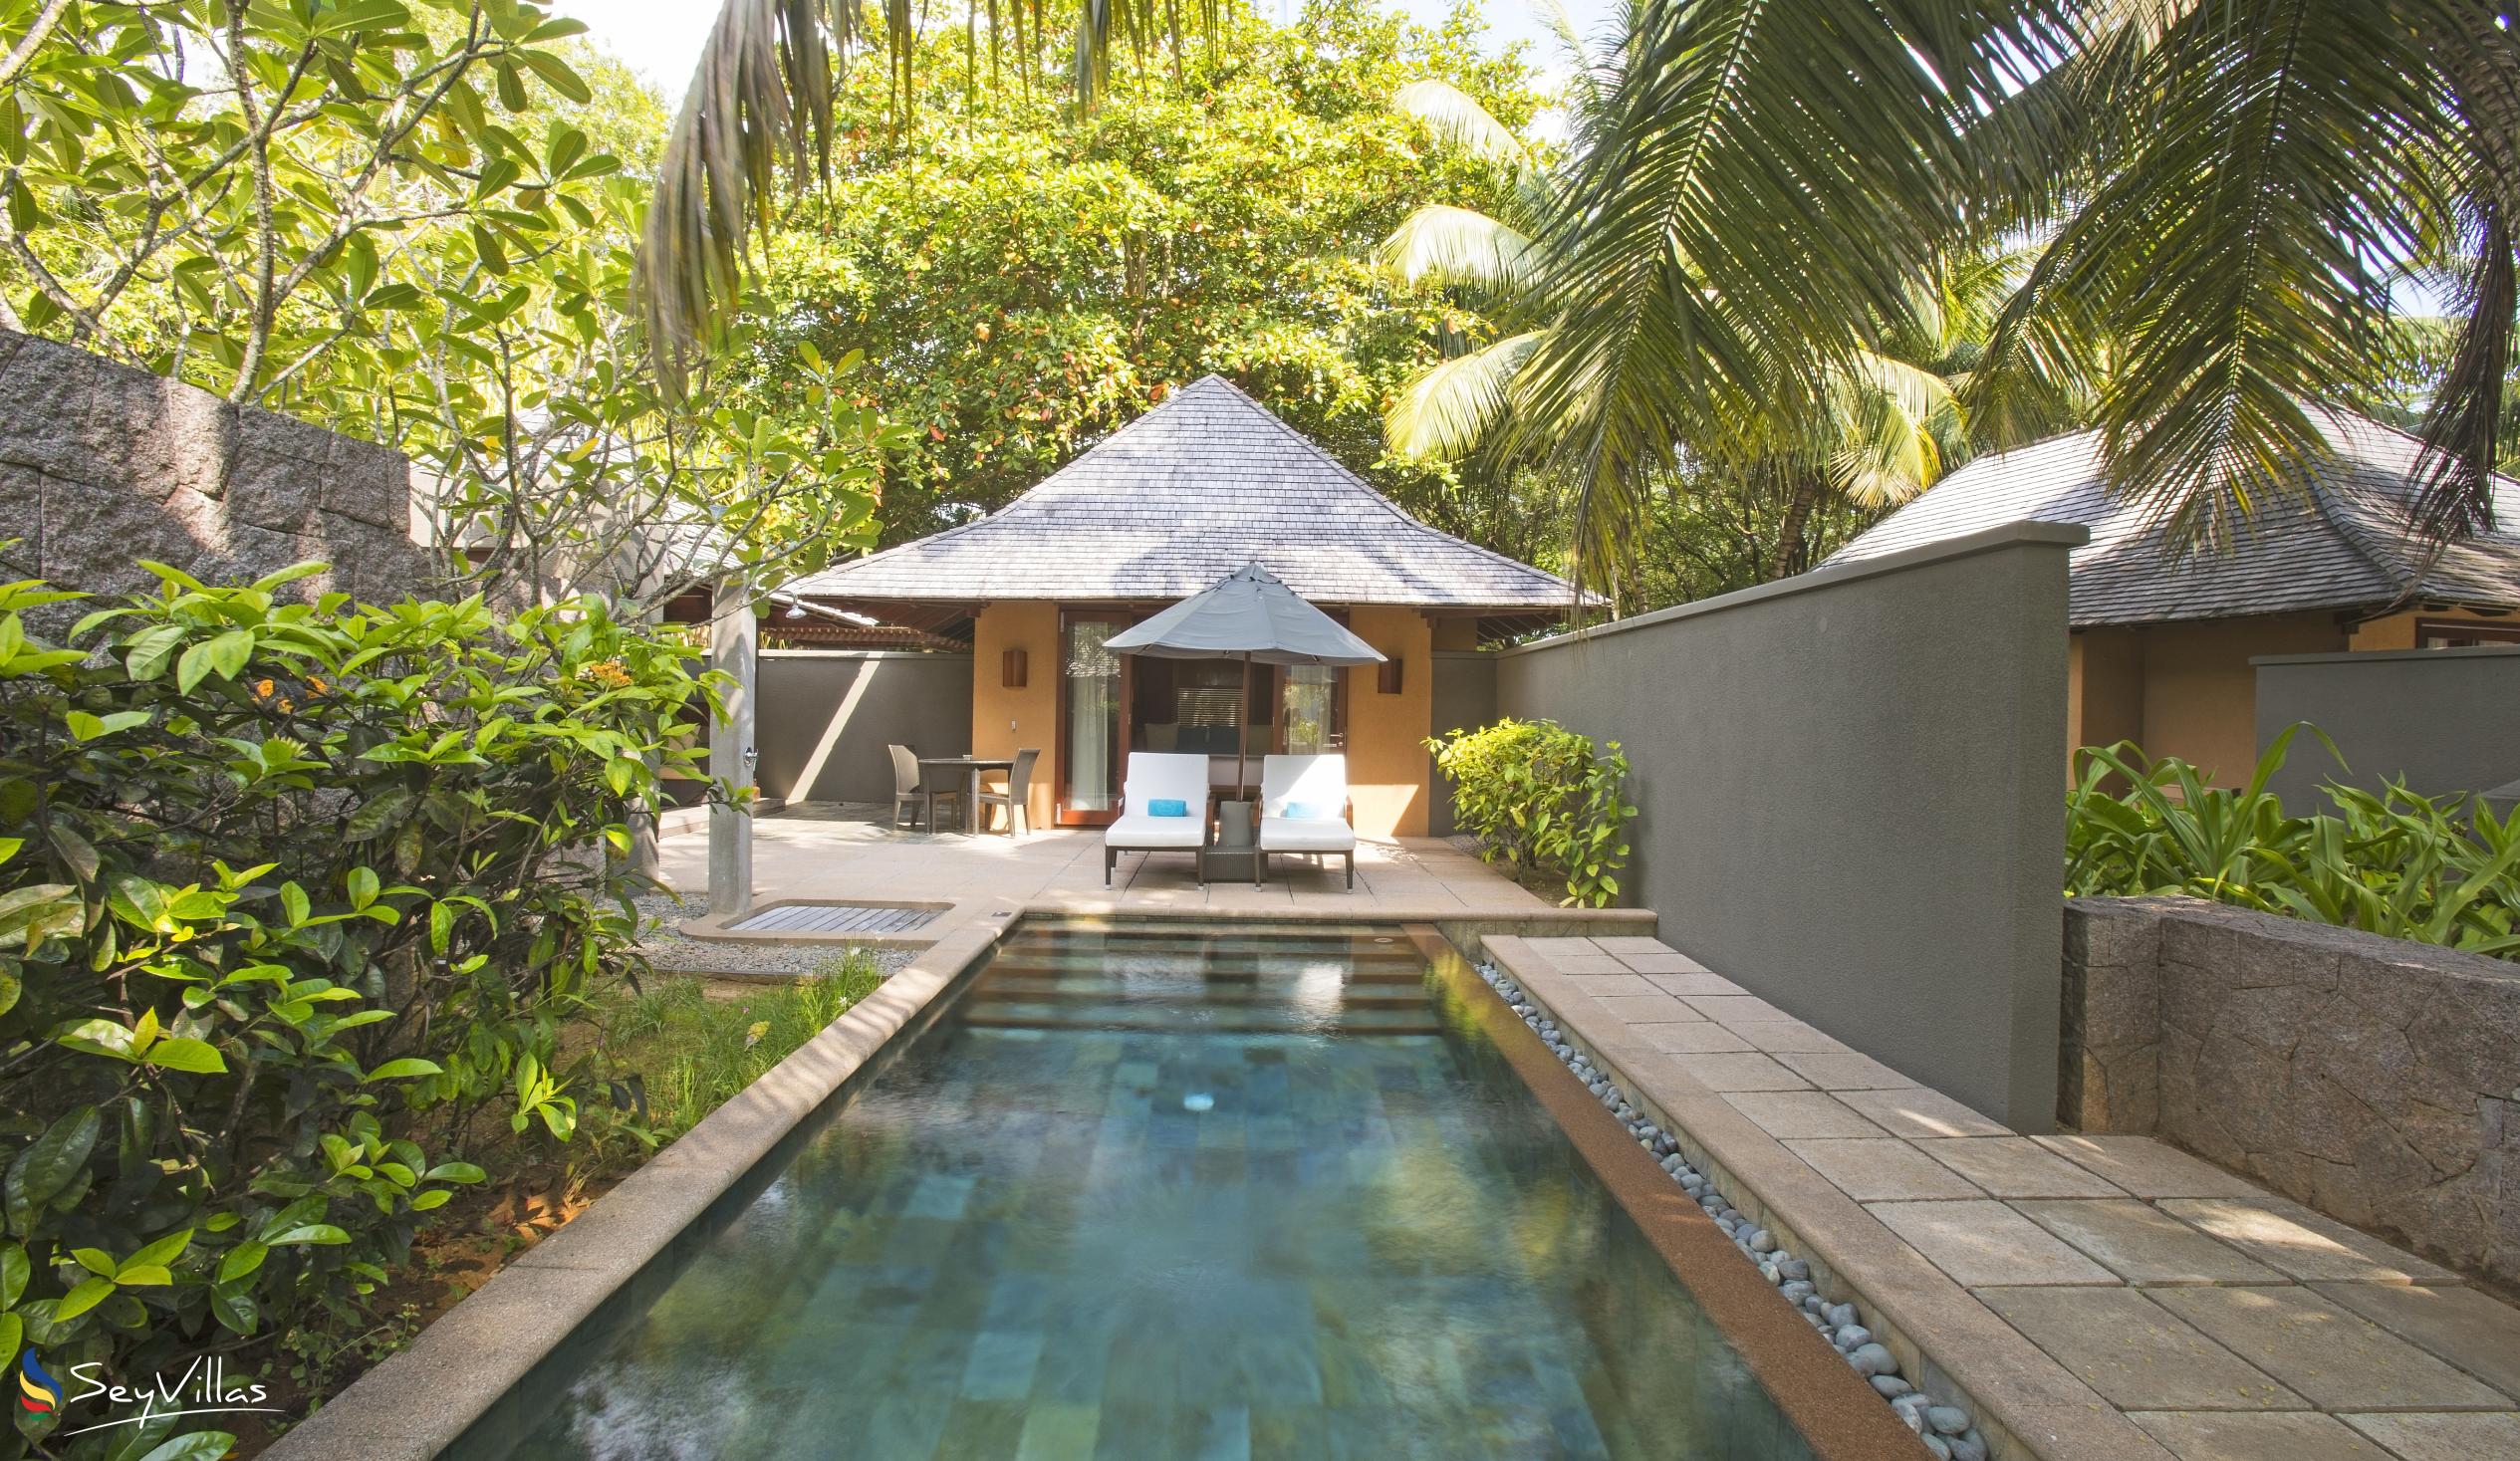 Photo 261: Constance Ephelia Seychelles - 1-Bedroom Beach Villa - Mahé (Seychelles)